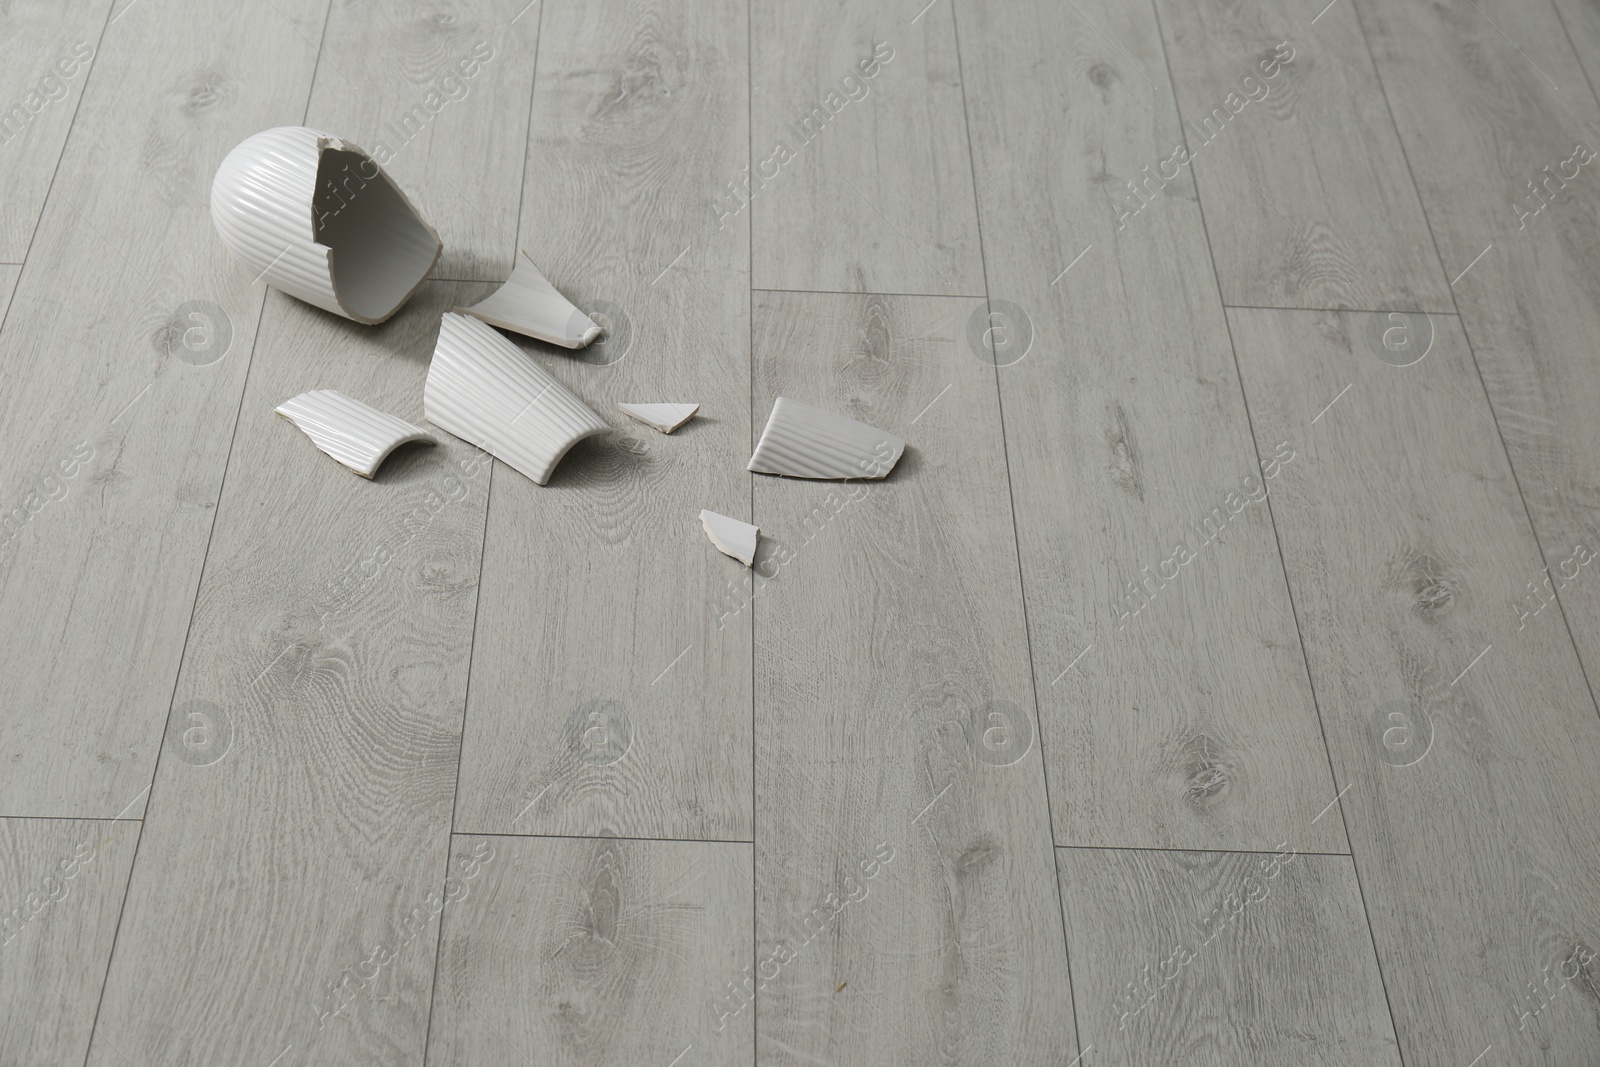 Photo of Broken ceramic vase on wooden floor. Space for text